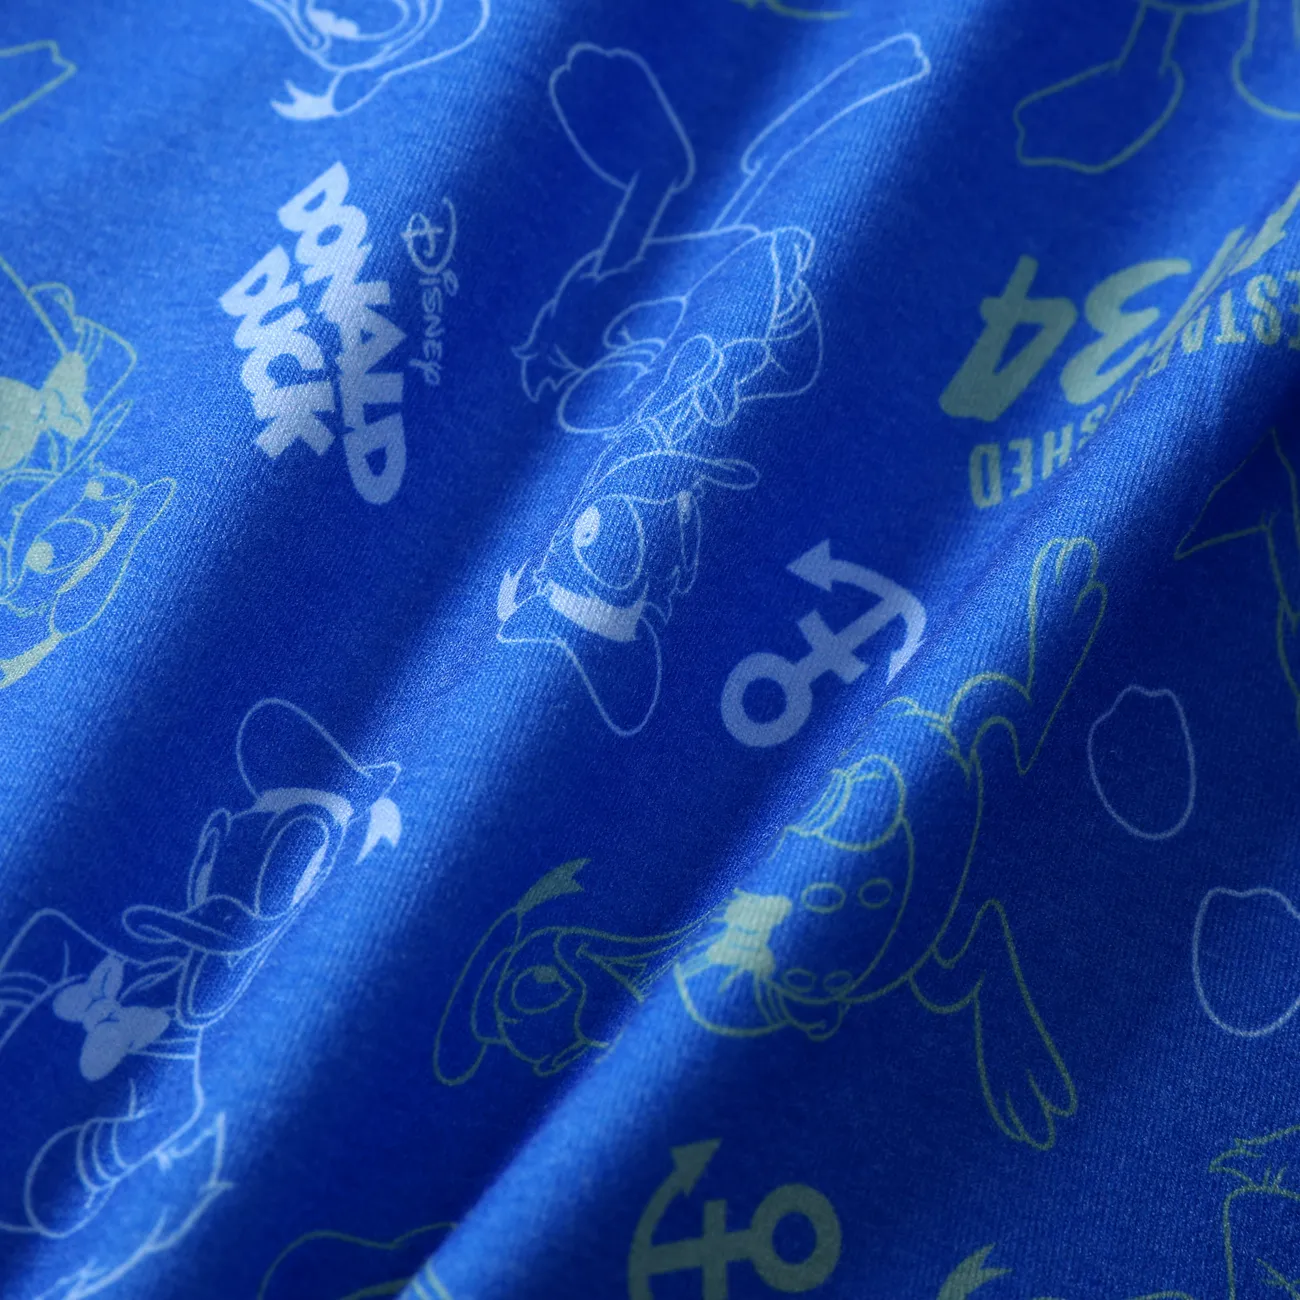 Disney Mickey and Friends Unissexo Infantil T-shirts Azul big image 1